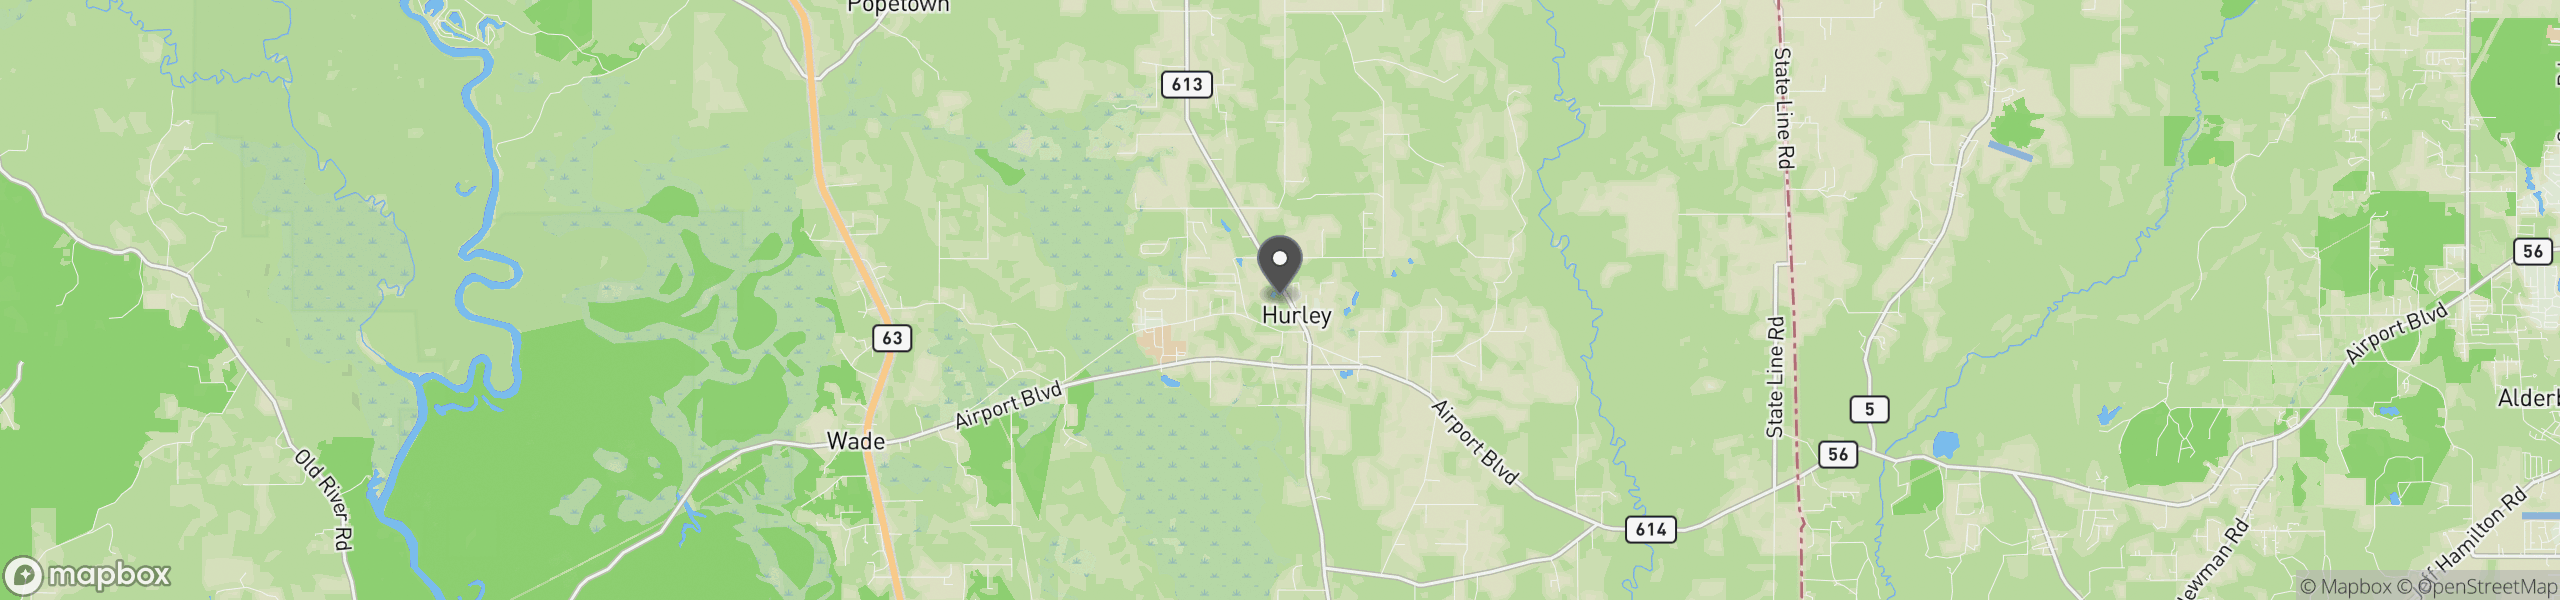 Hurley, MS